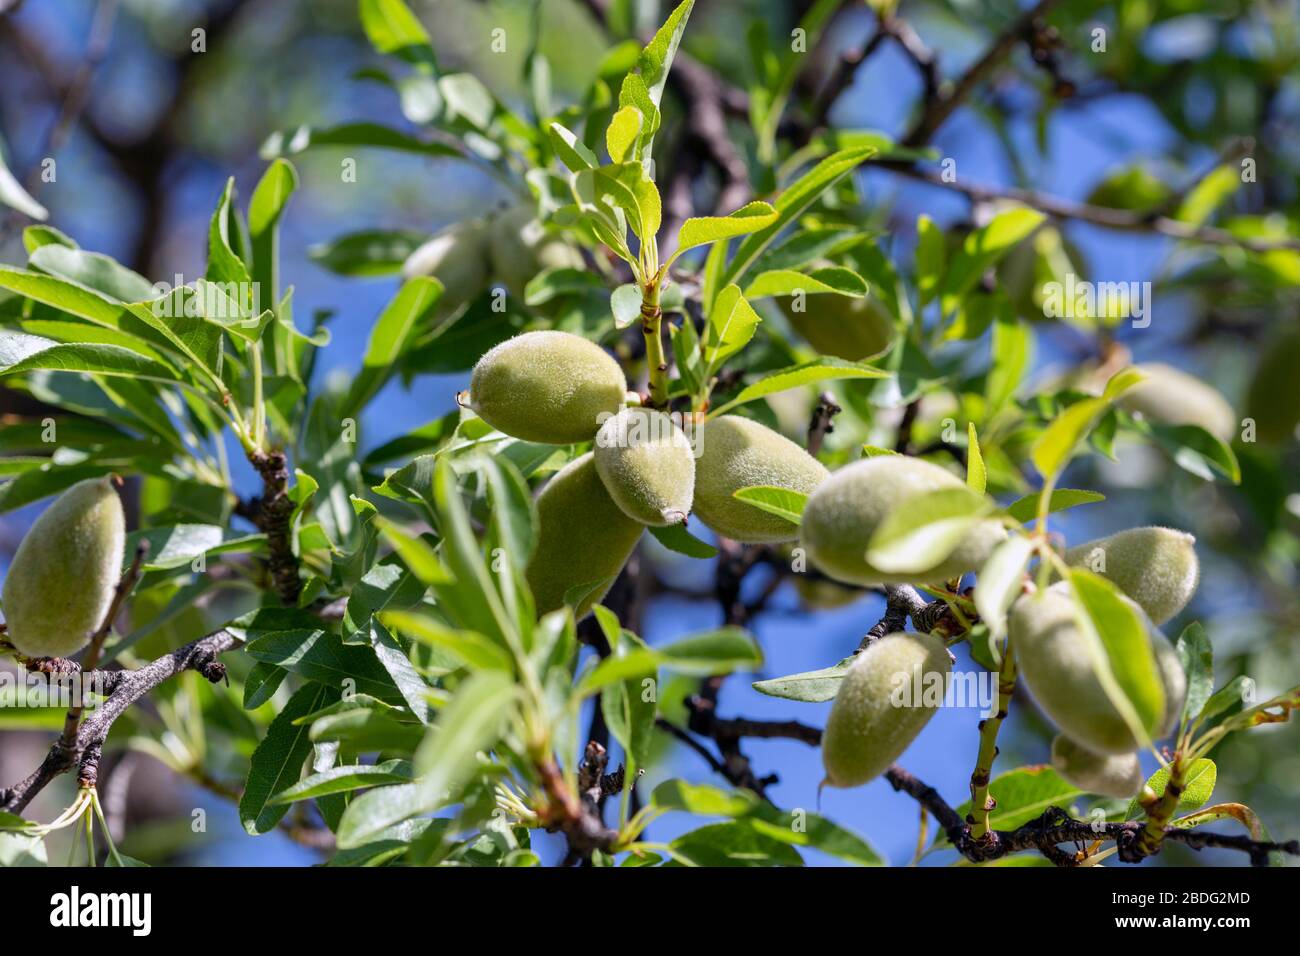 Mandorle (Prunus dulcis) nei loro scafi, o bucce, su un albero. Spagna meridionale. Foto Stock